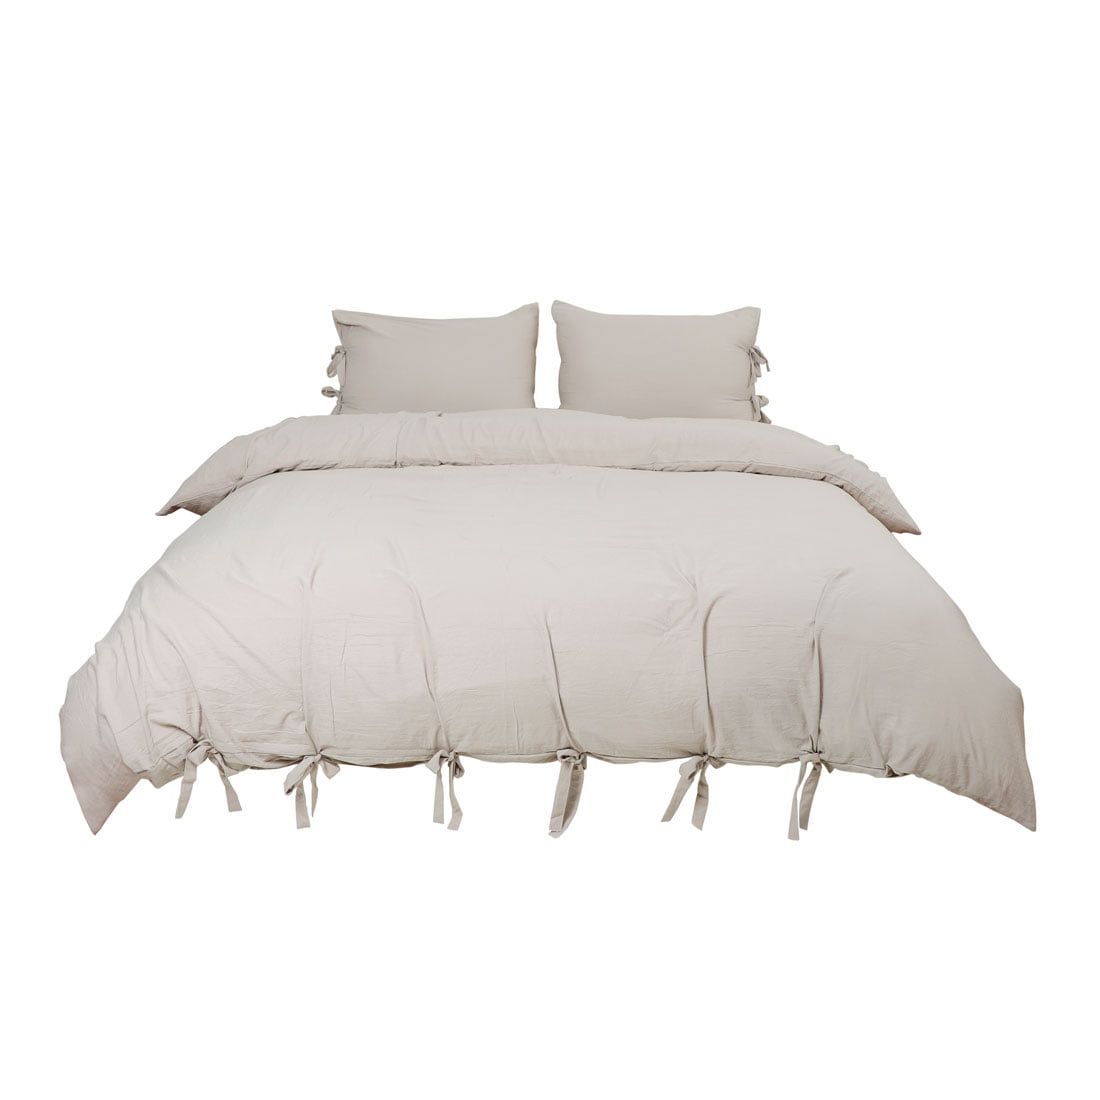 Washed Cotton Bedding Set Comforter Duvet Cover Pillowcase Tan